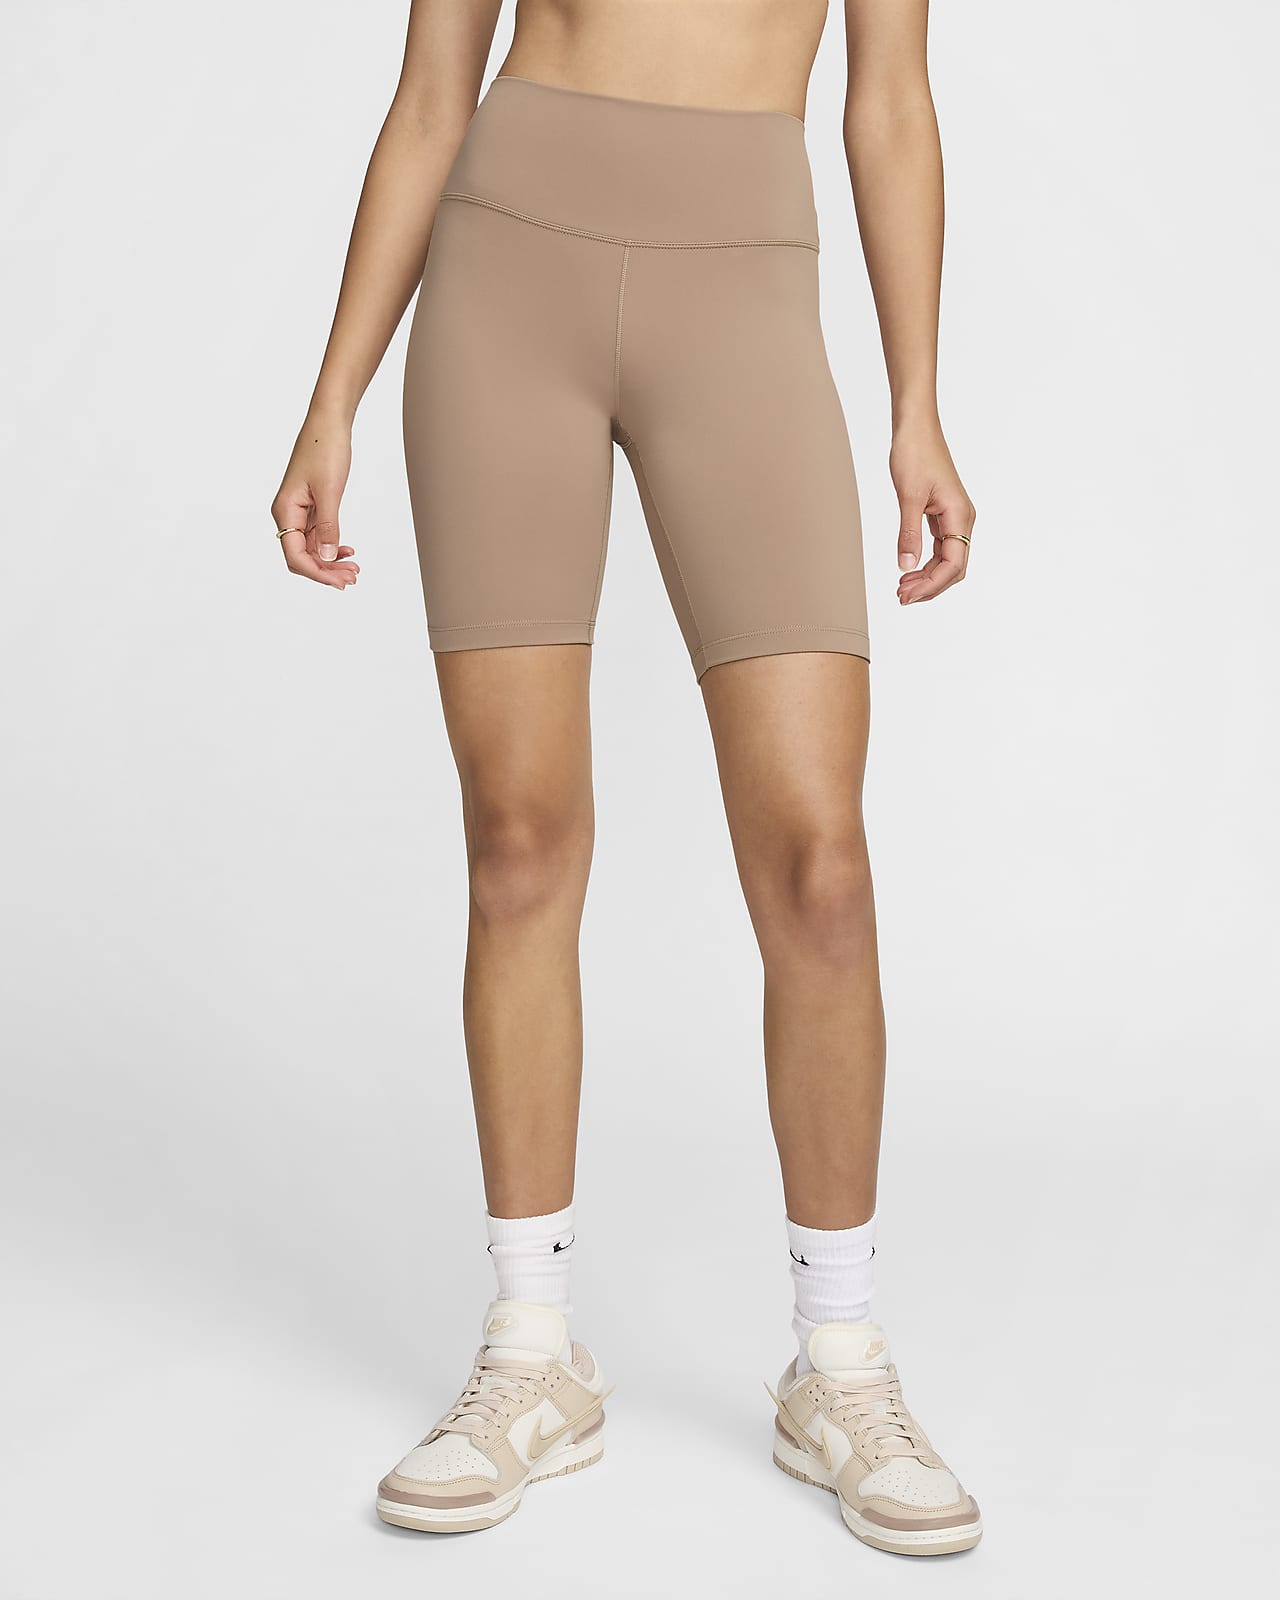 Nike One magas derekú, 20 cm-es női kerékpáros rövidnadrág